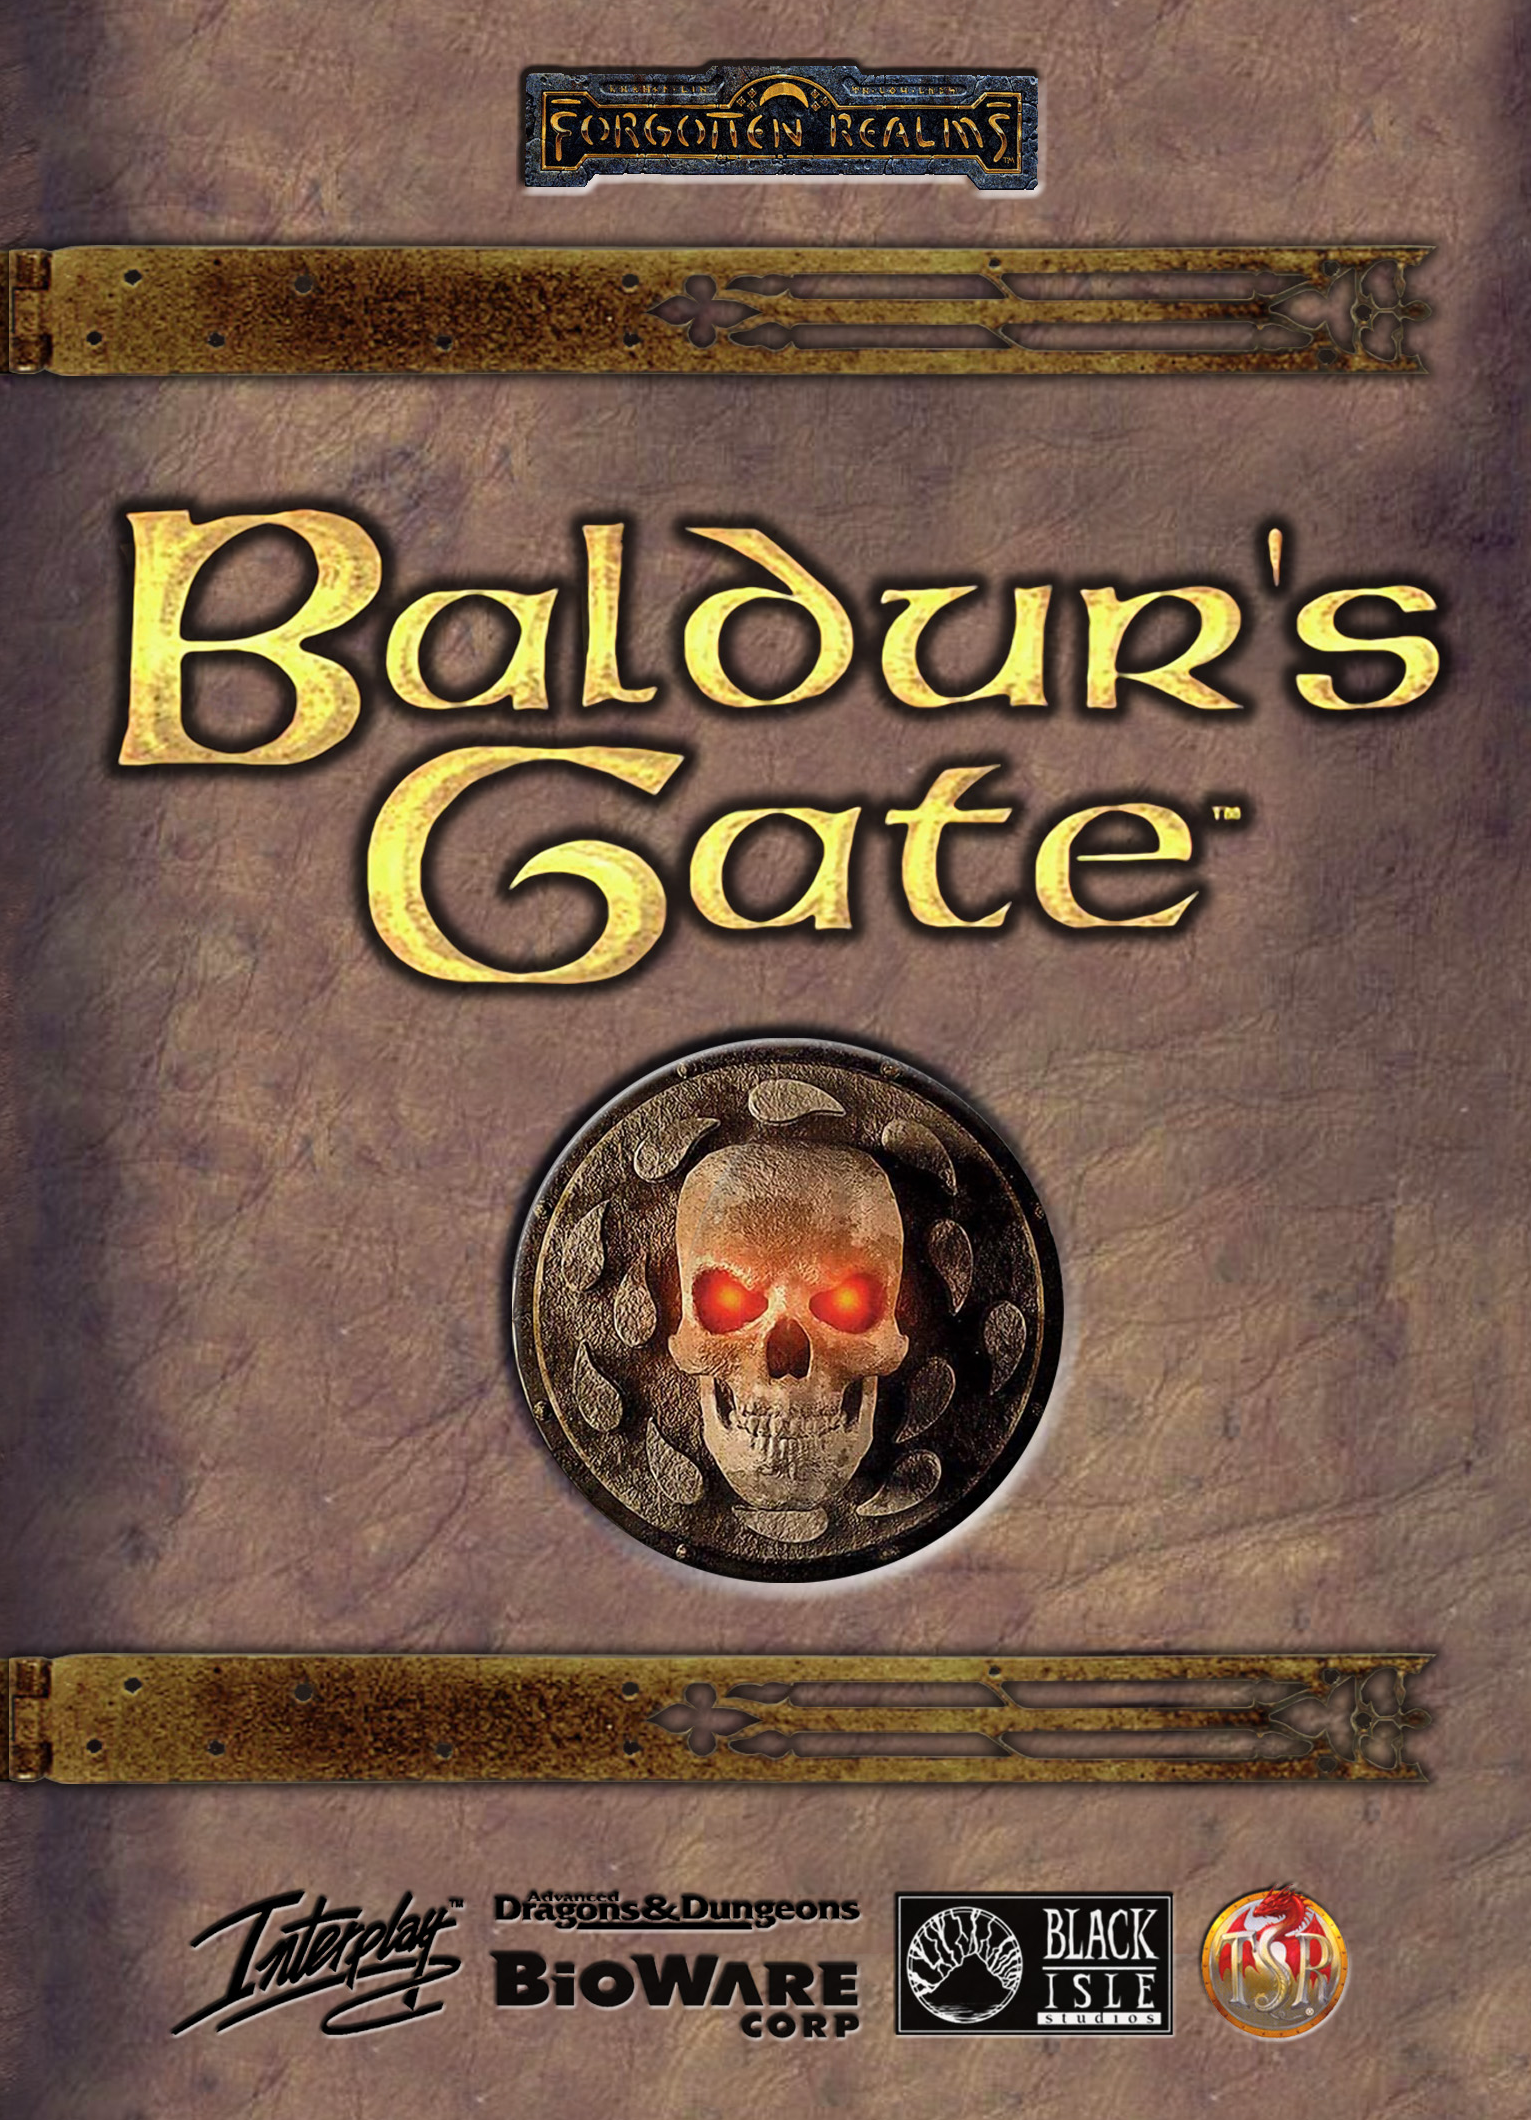 Baldur's Gate Picture